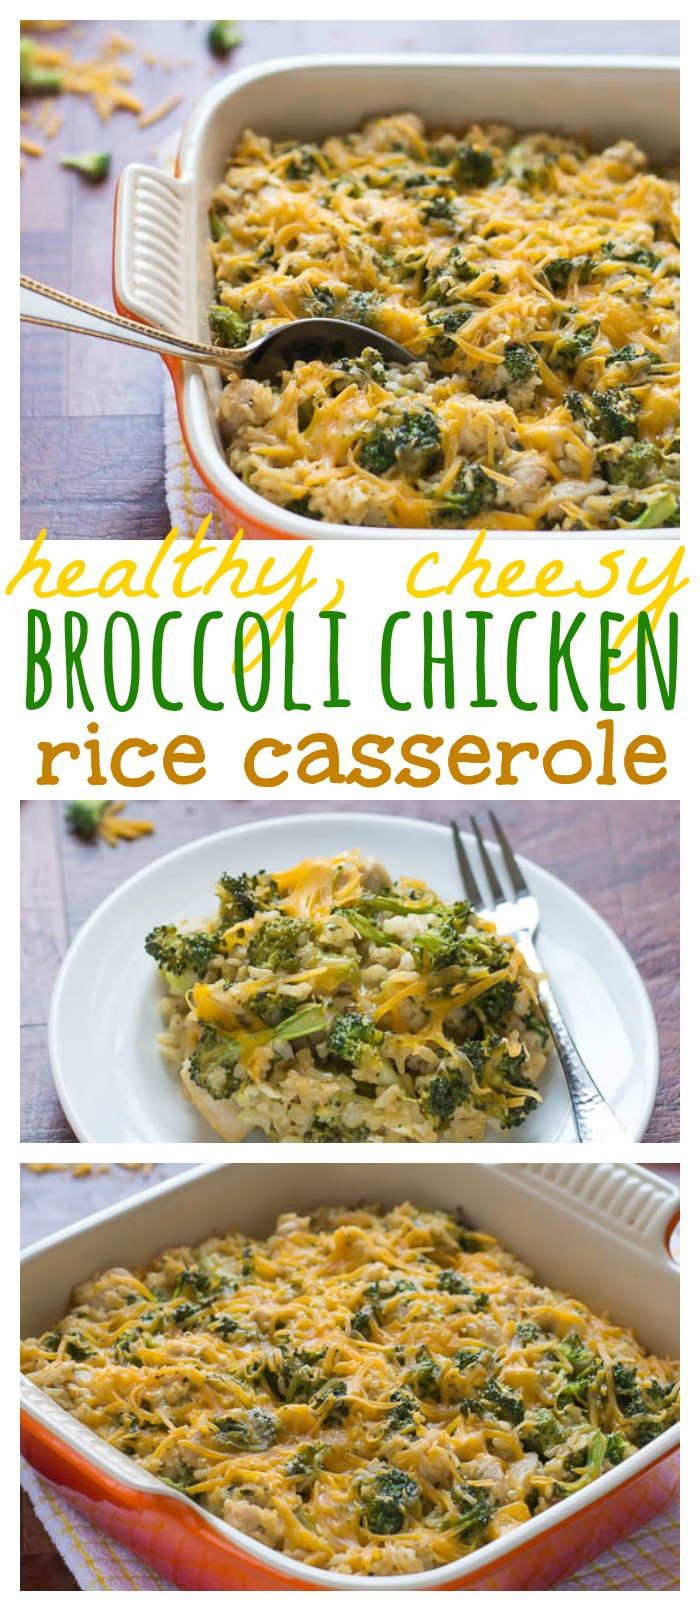 Chicken Broccoli Rice Casserole Campbells
 broccoli chicken rice casserole campbells